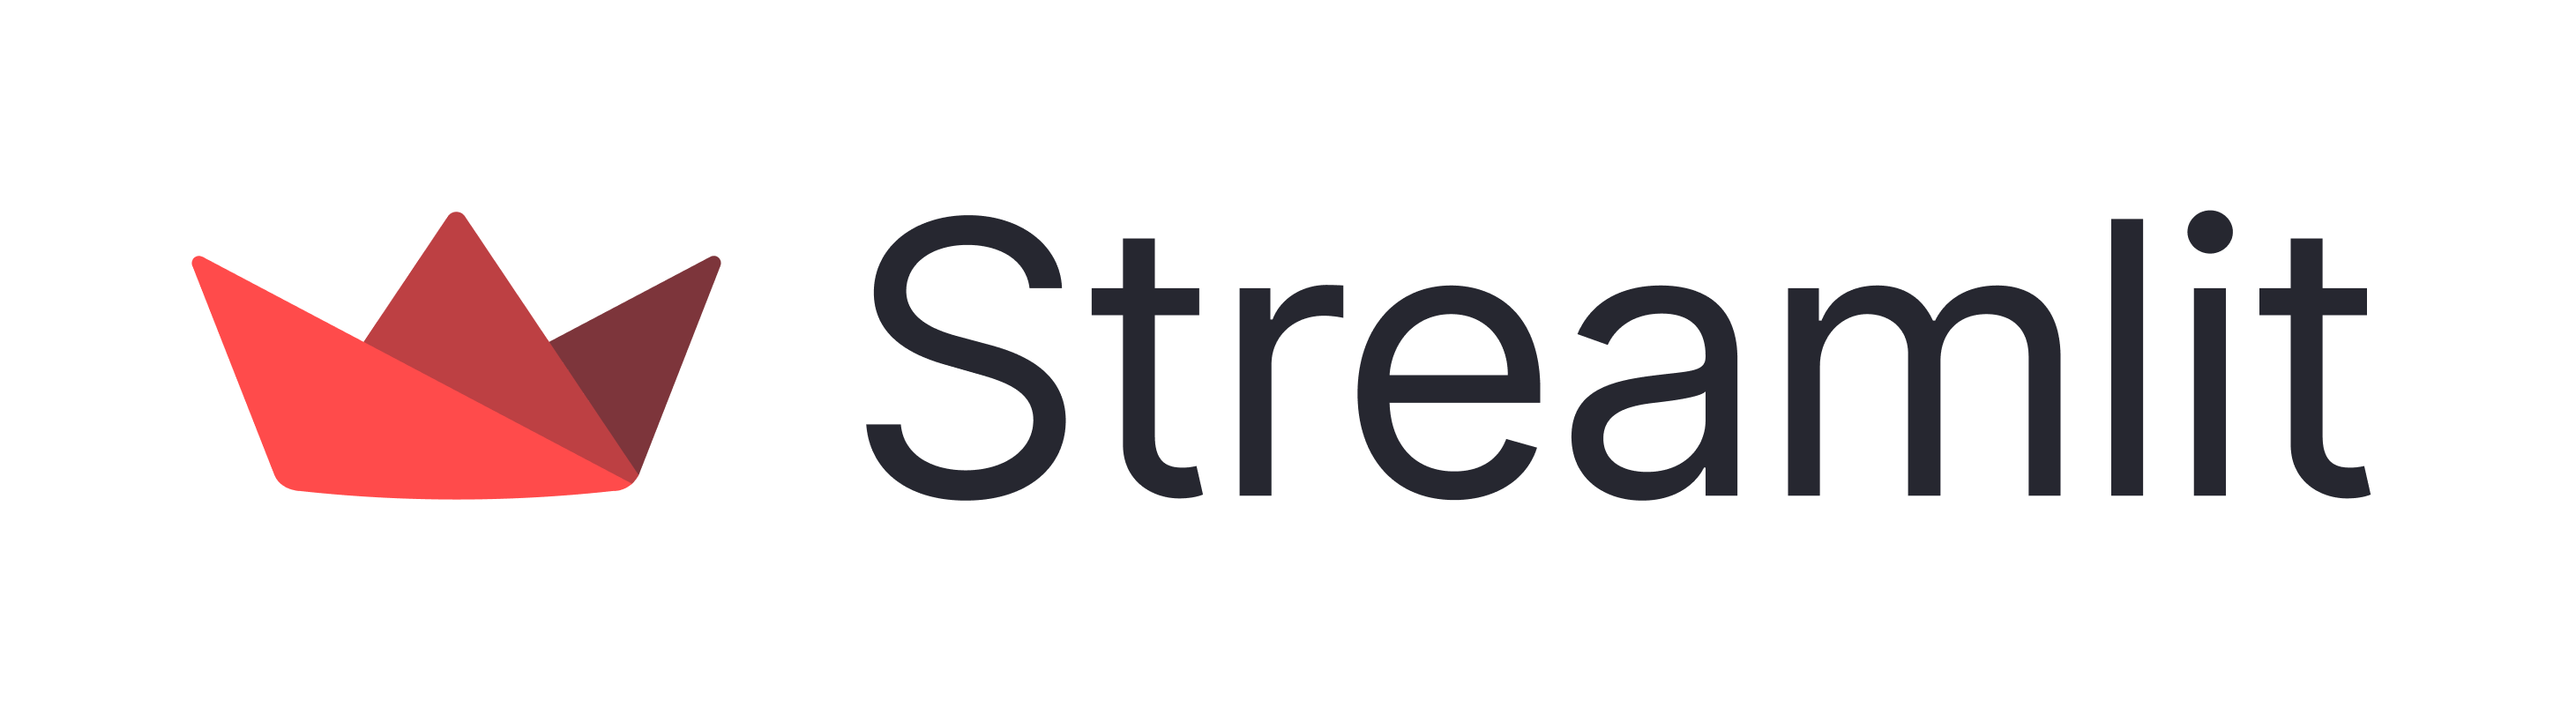 streamlit-logo-secondary-colormark-darktext.png